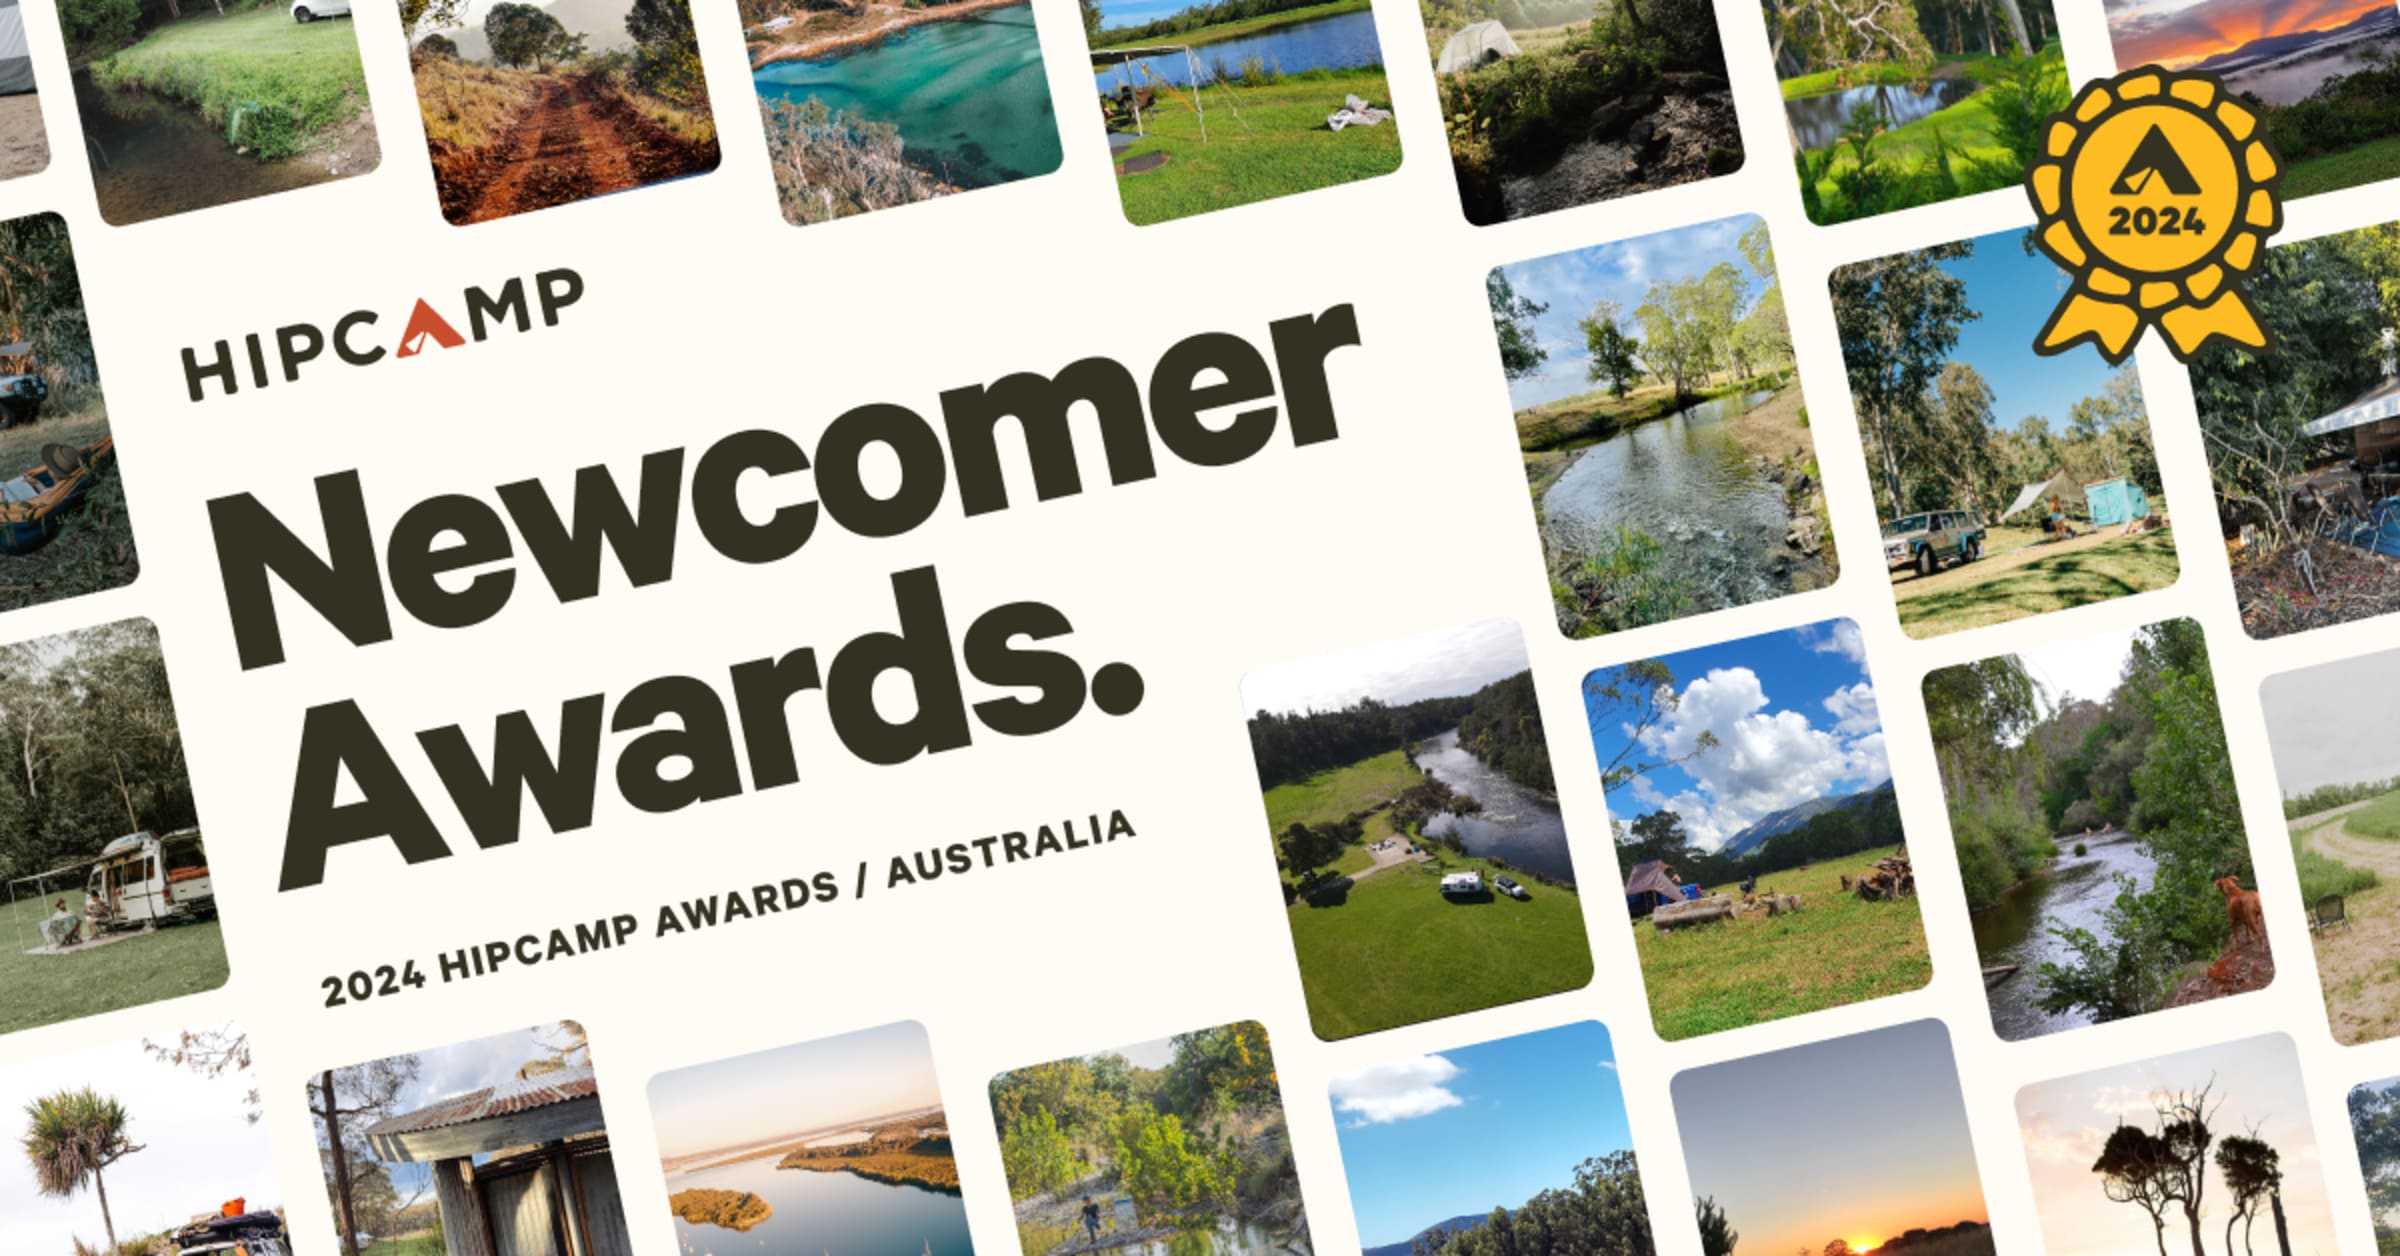 Hipcamp Newcomer Awards 2024: Australia Edition